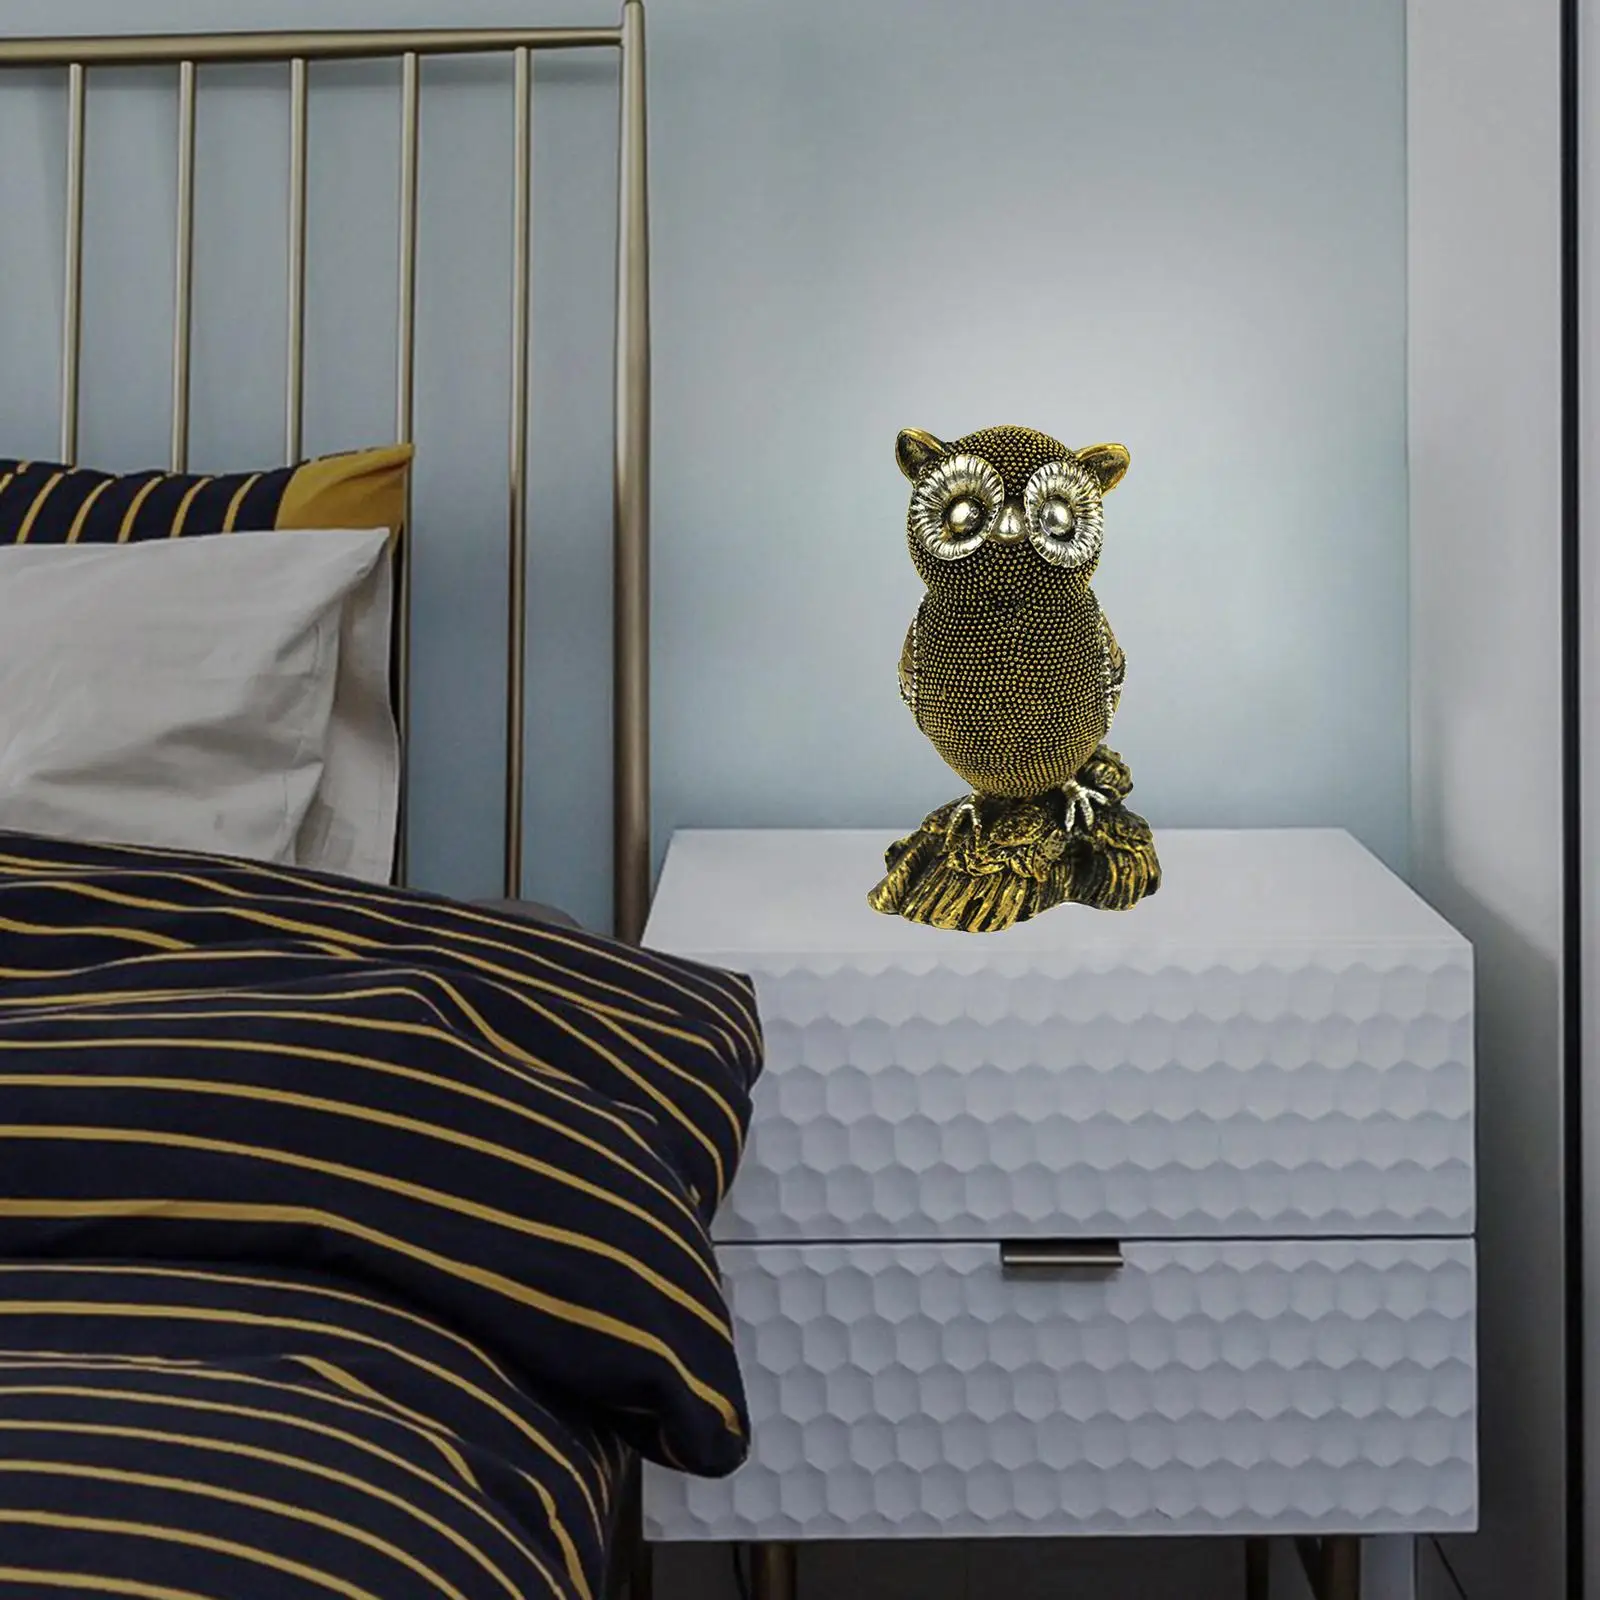 2x Owl Statue Ornaments Sculpture Animal Figurine Living Room Birds Lover